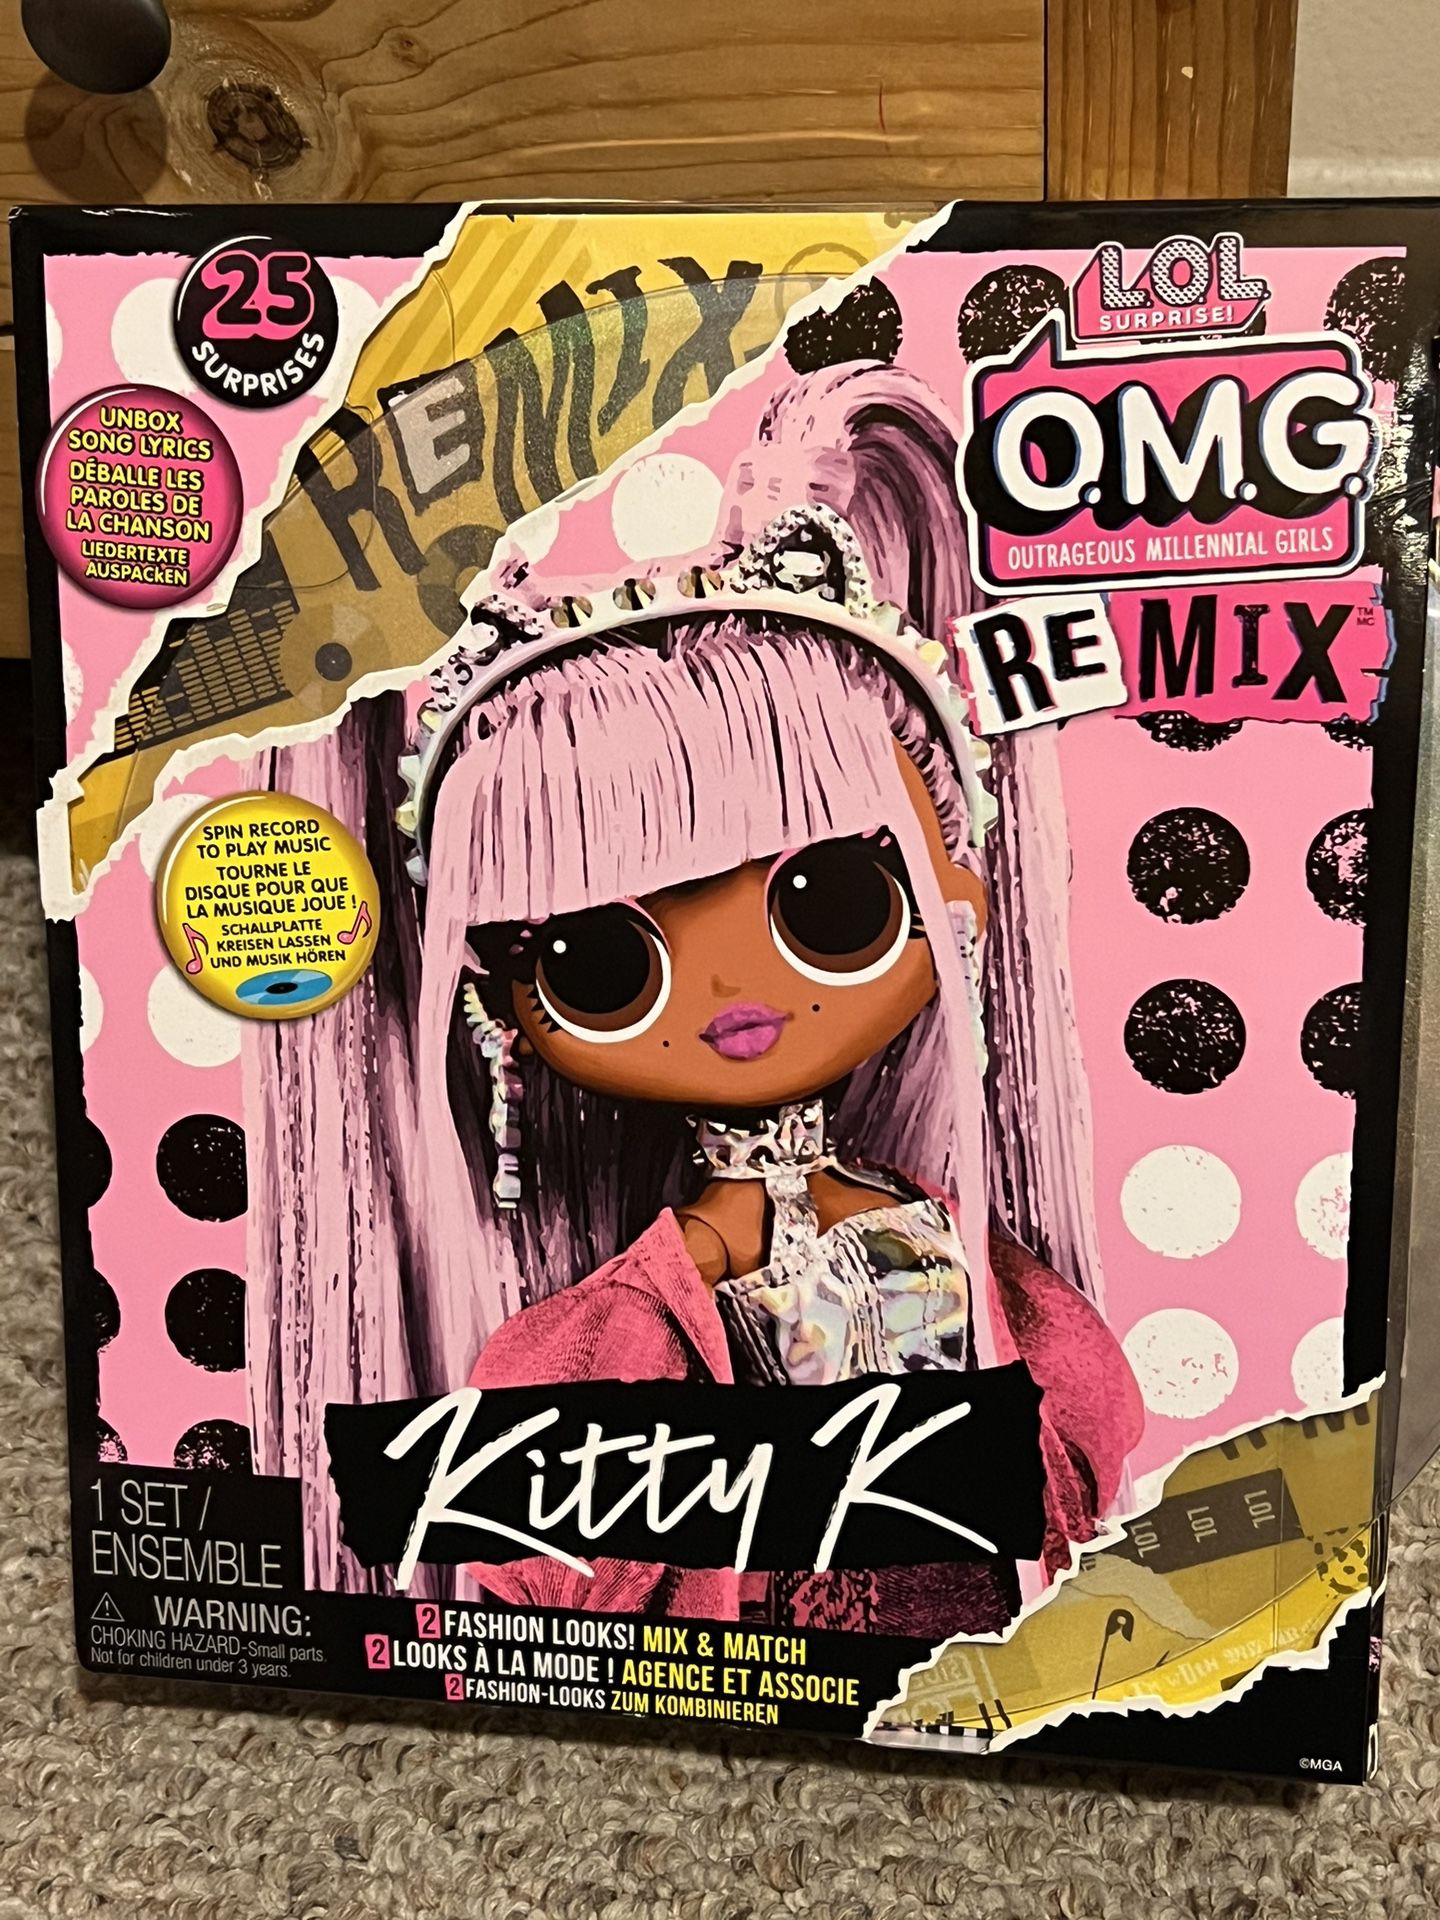 Lol Surprise Omg Remix Kitty K Doll 